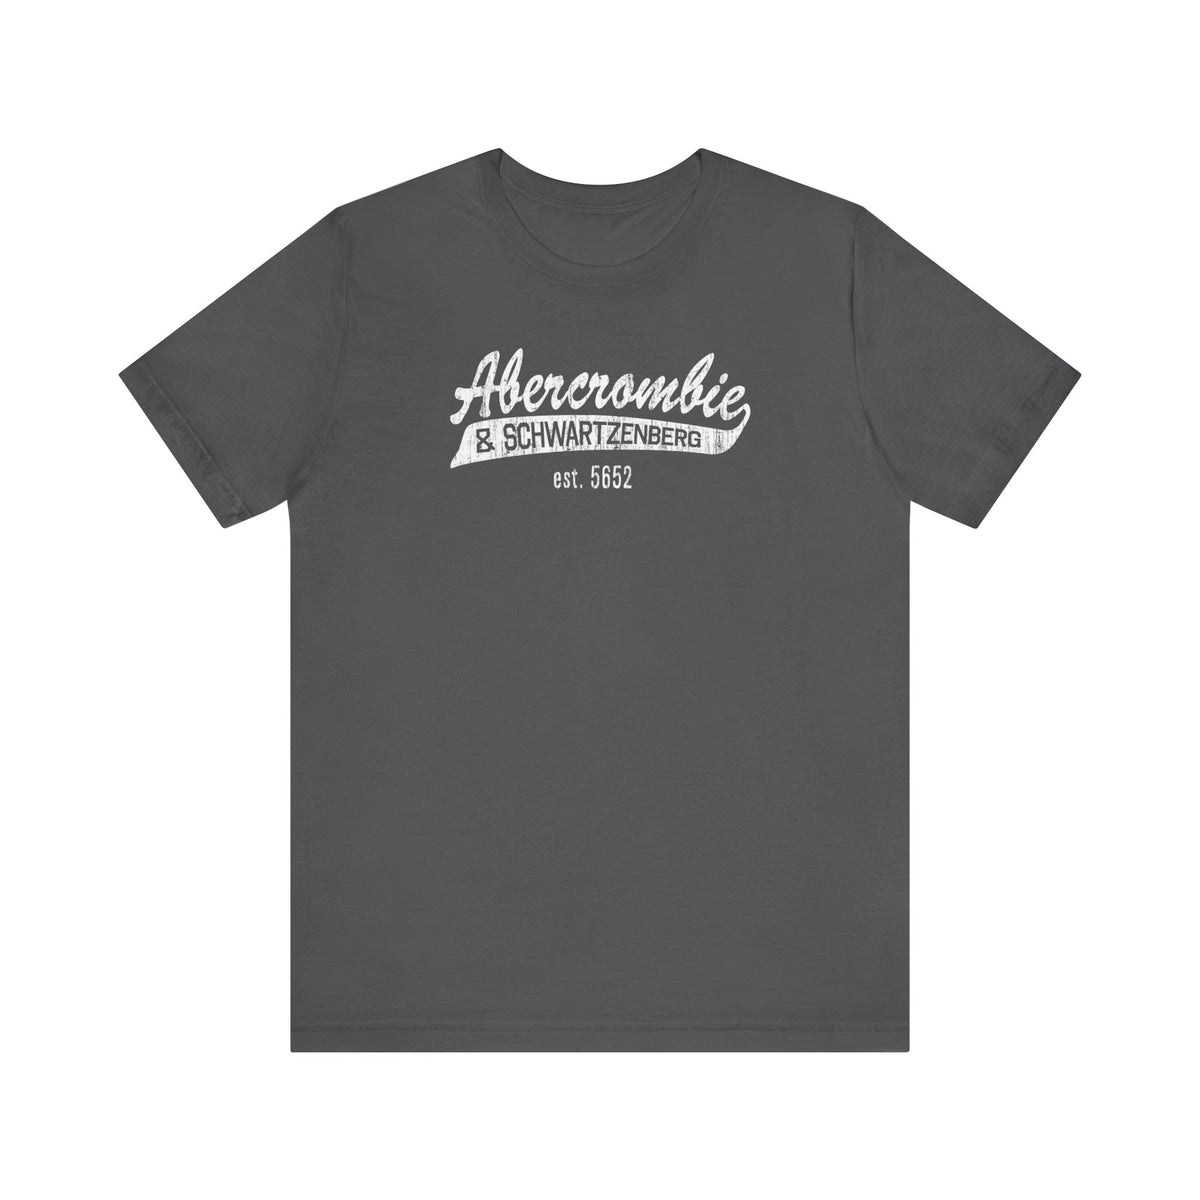 Abercrombie & Schwartzenberg Est. 5662  - Men's T-Shirt